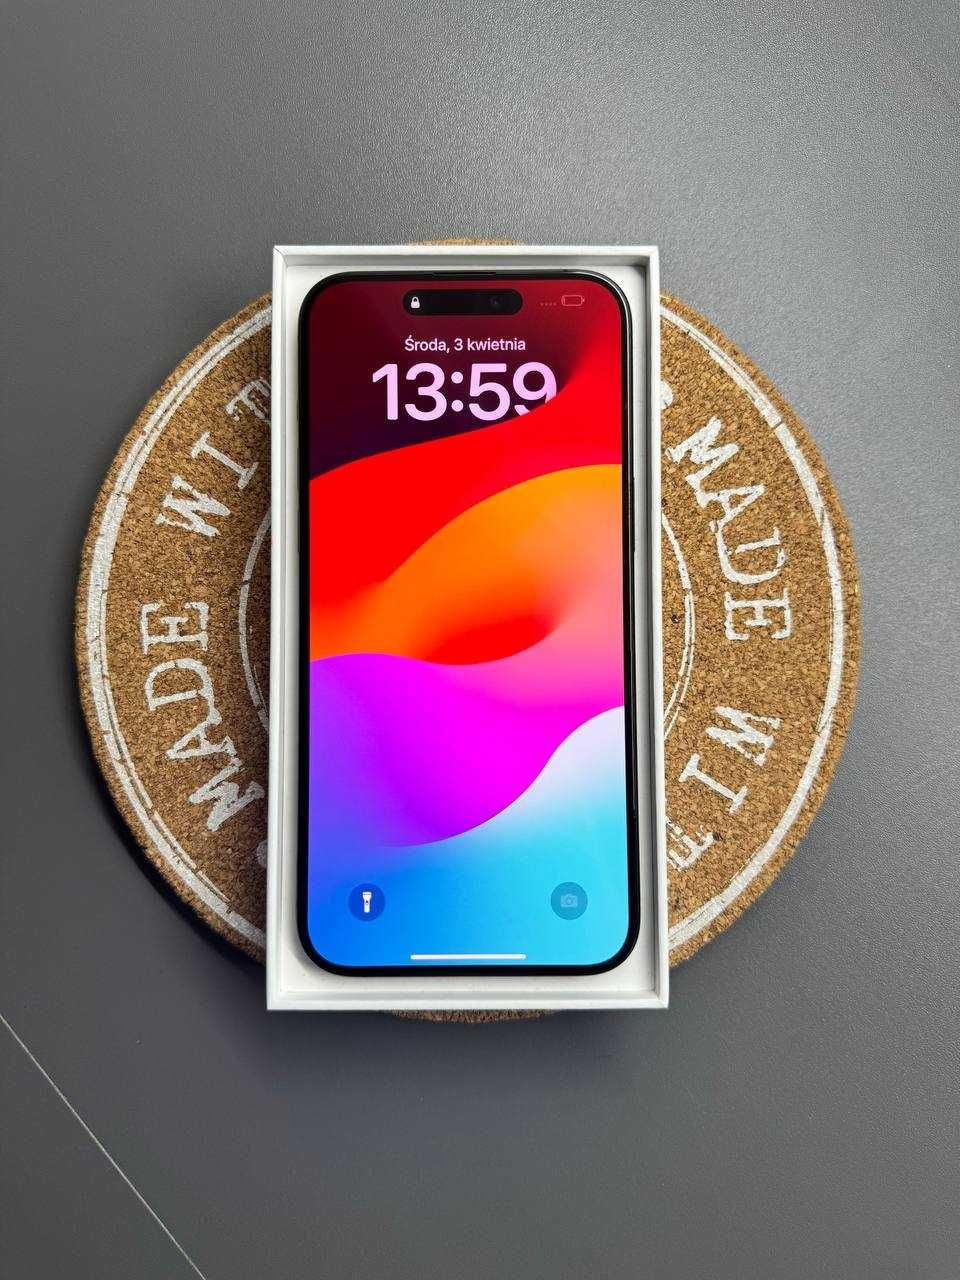 Iphone 15 Pro Max 1TB